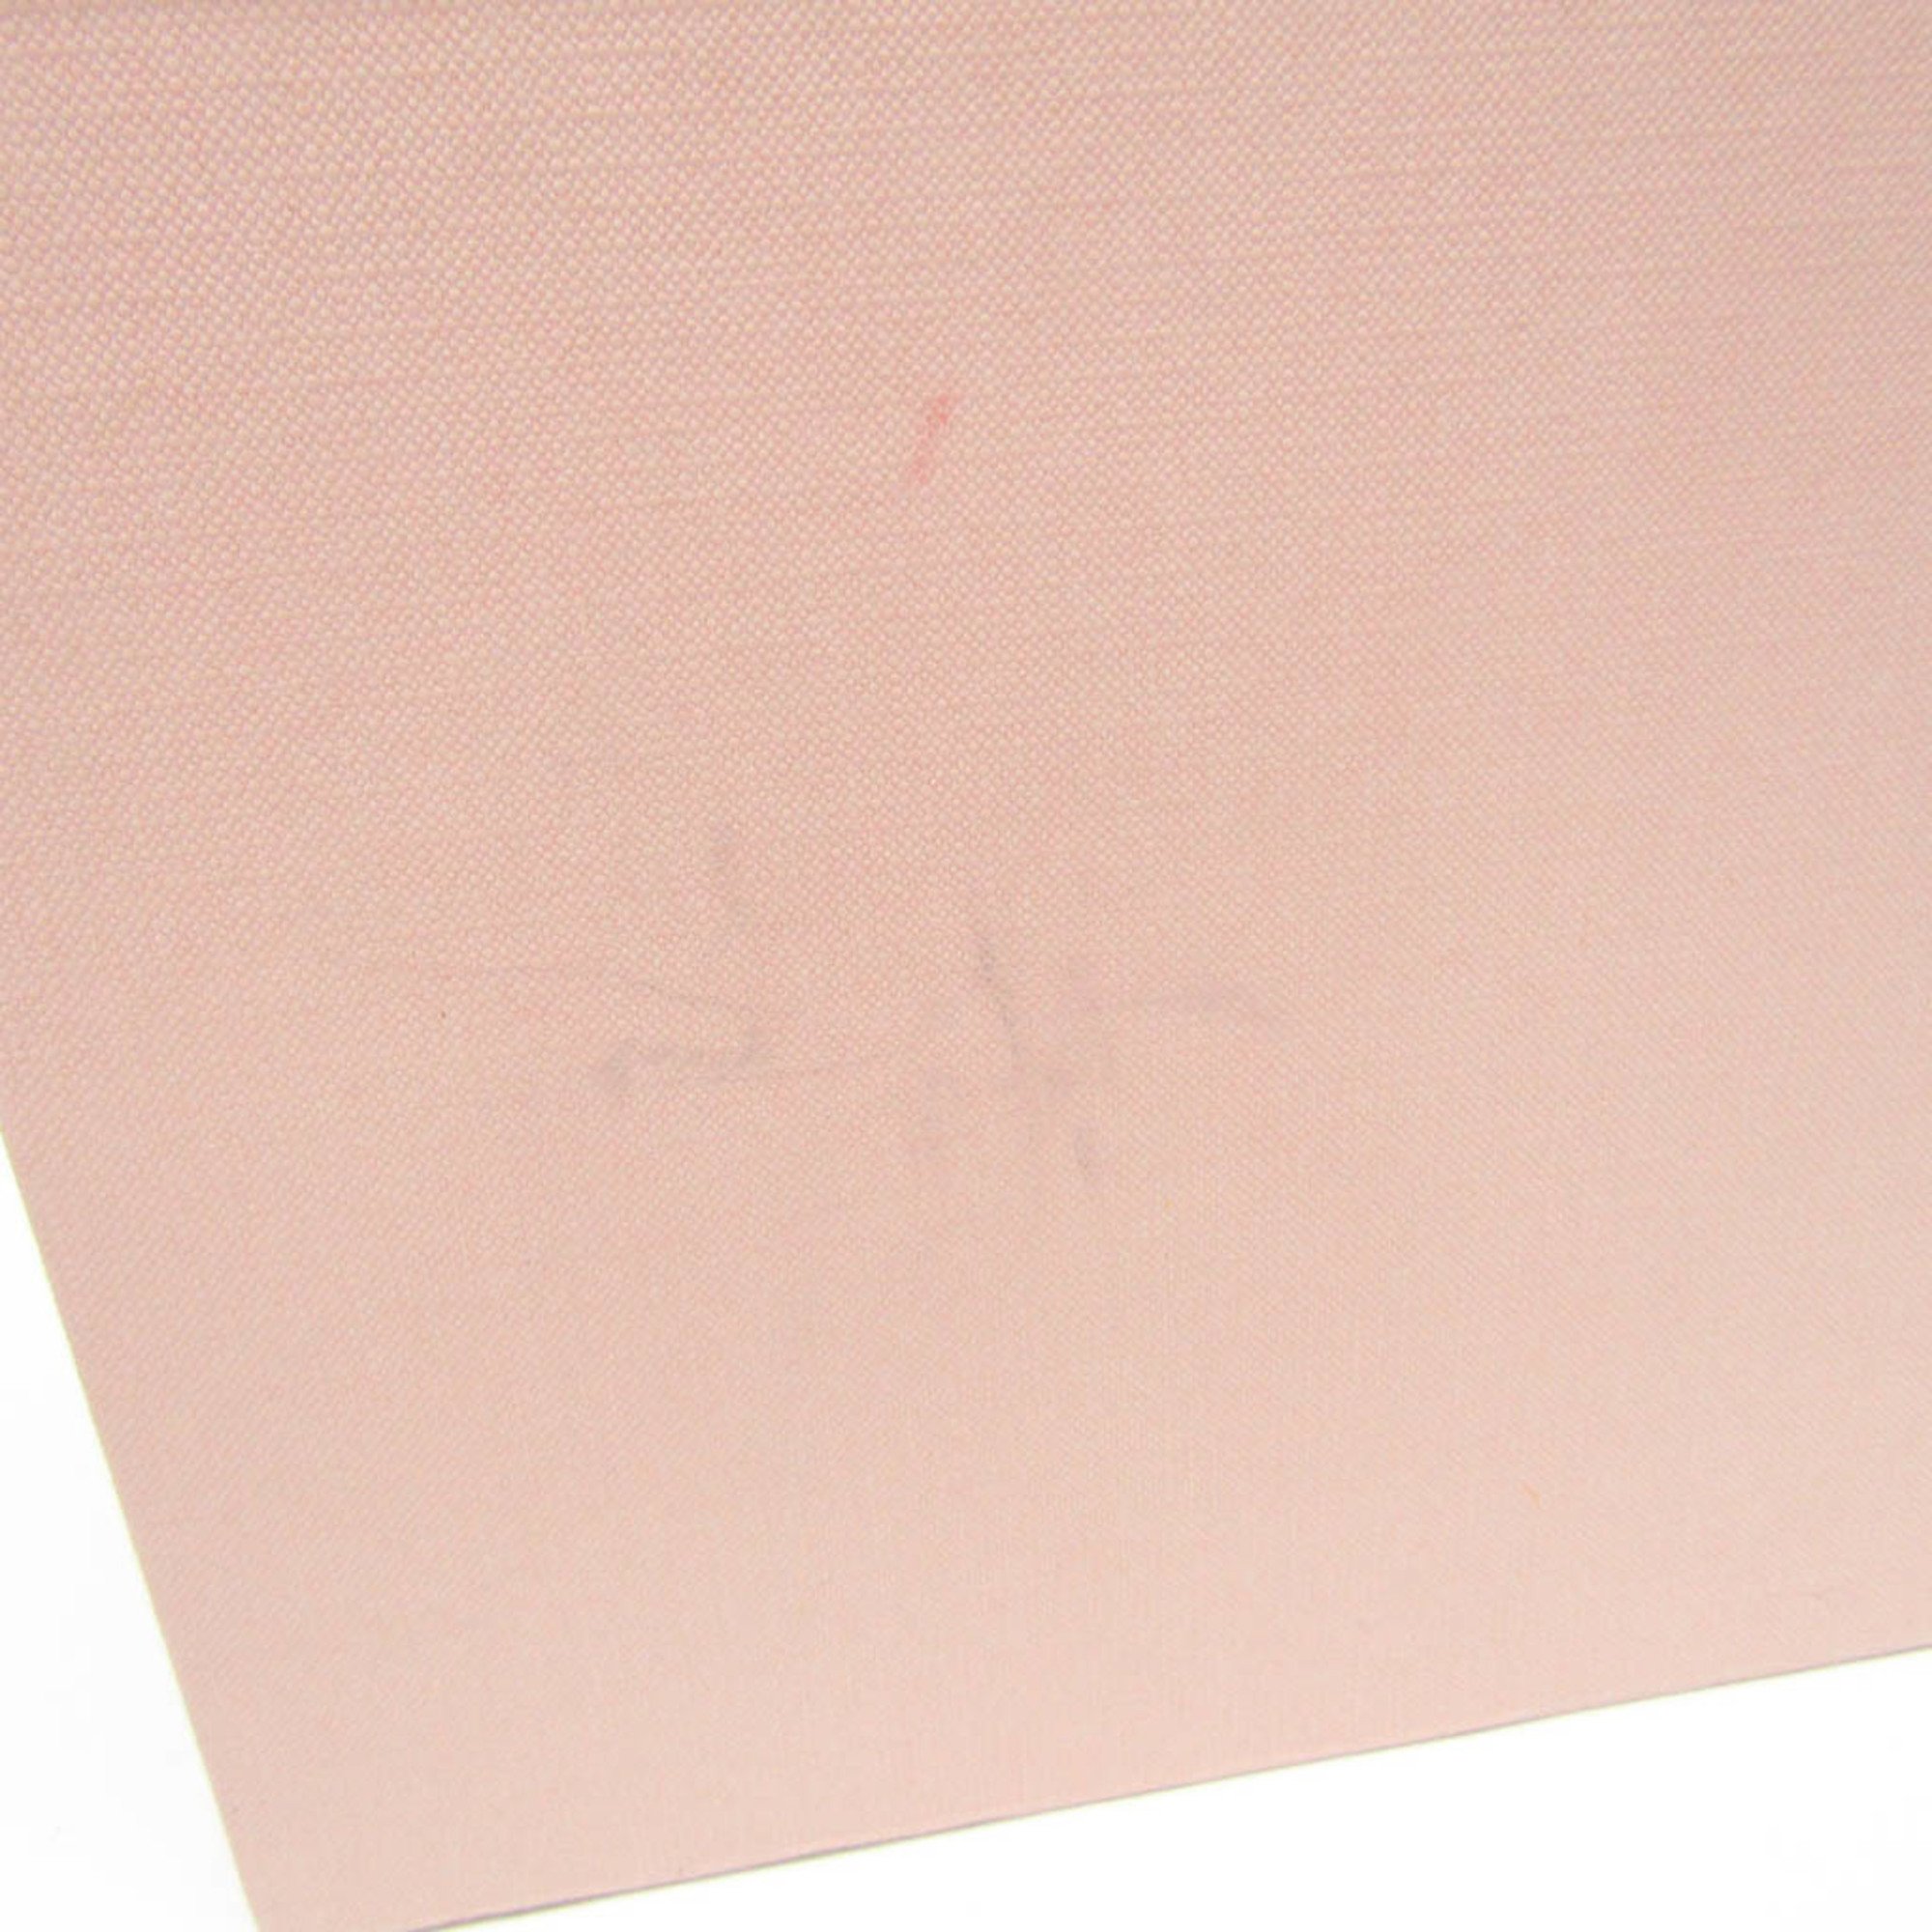 Miu Miu Ribbon Straw Cap, Medium Size, 5HC154 Women's Cap Beige,Pink